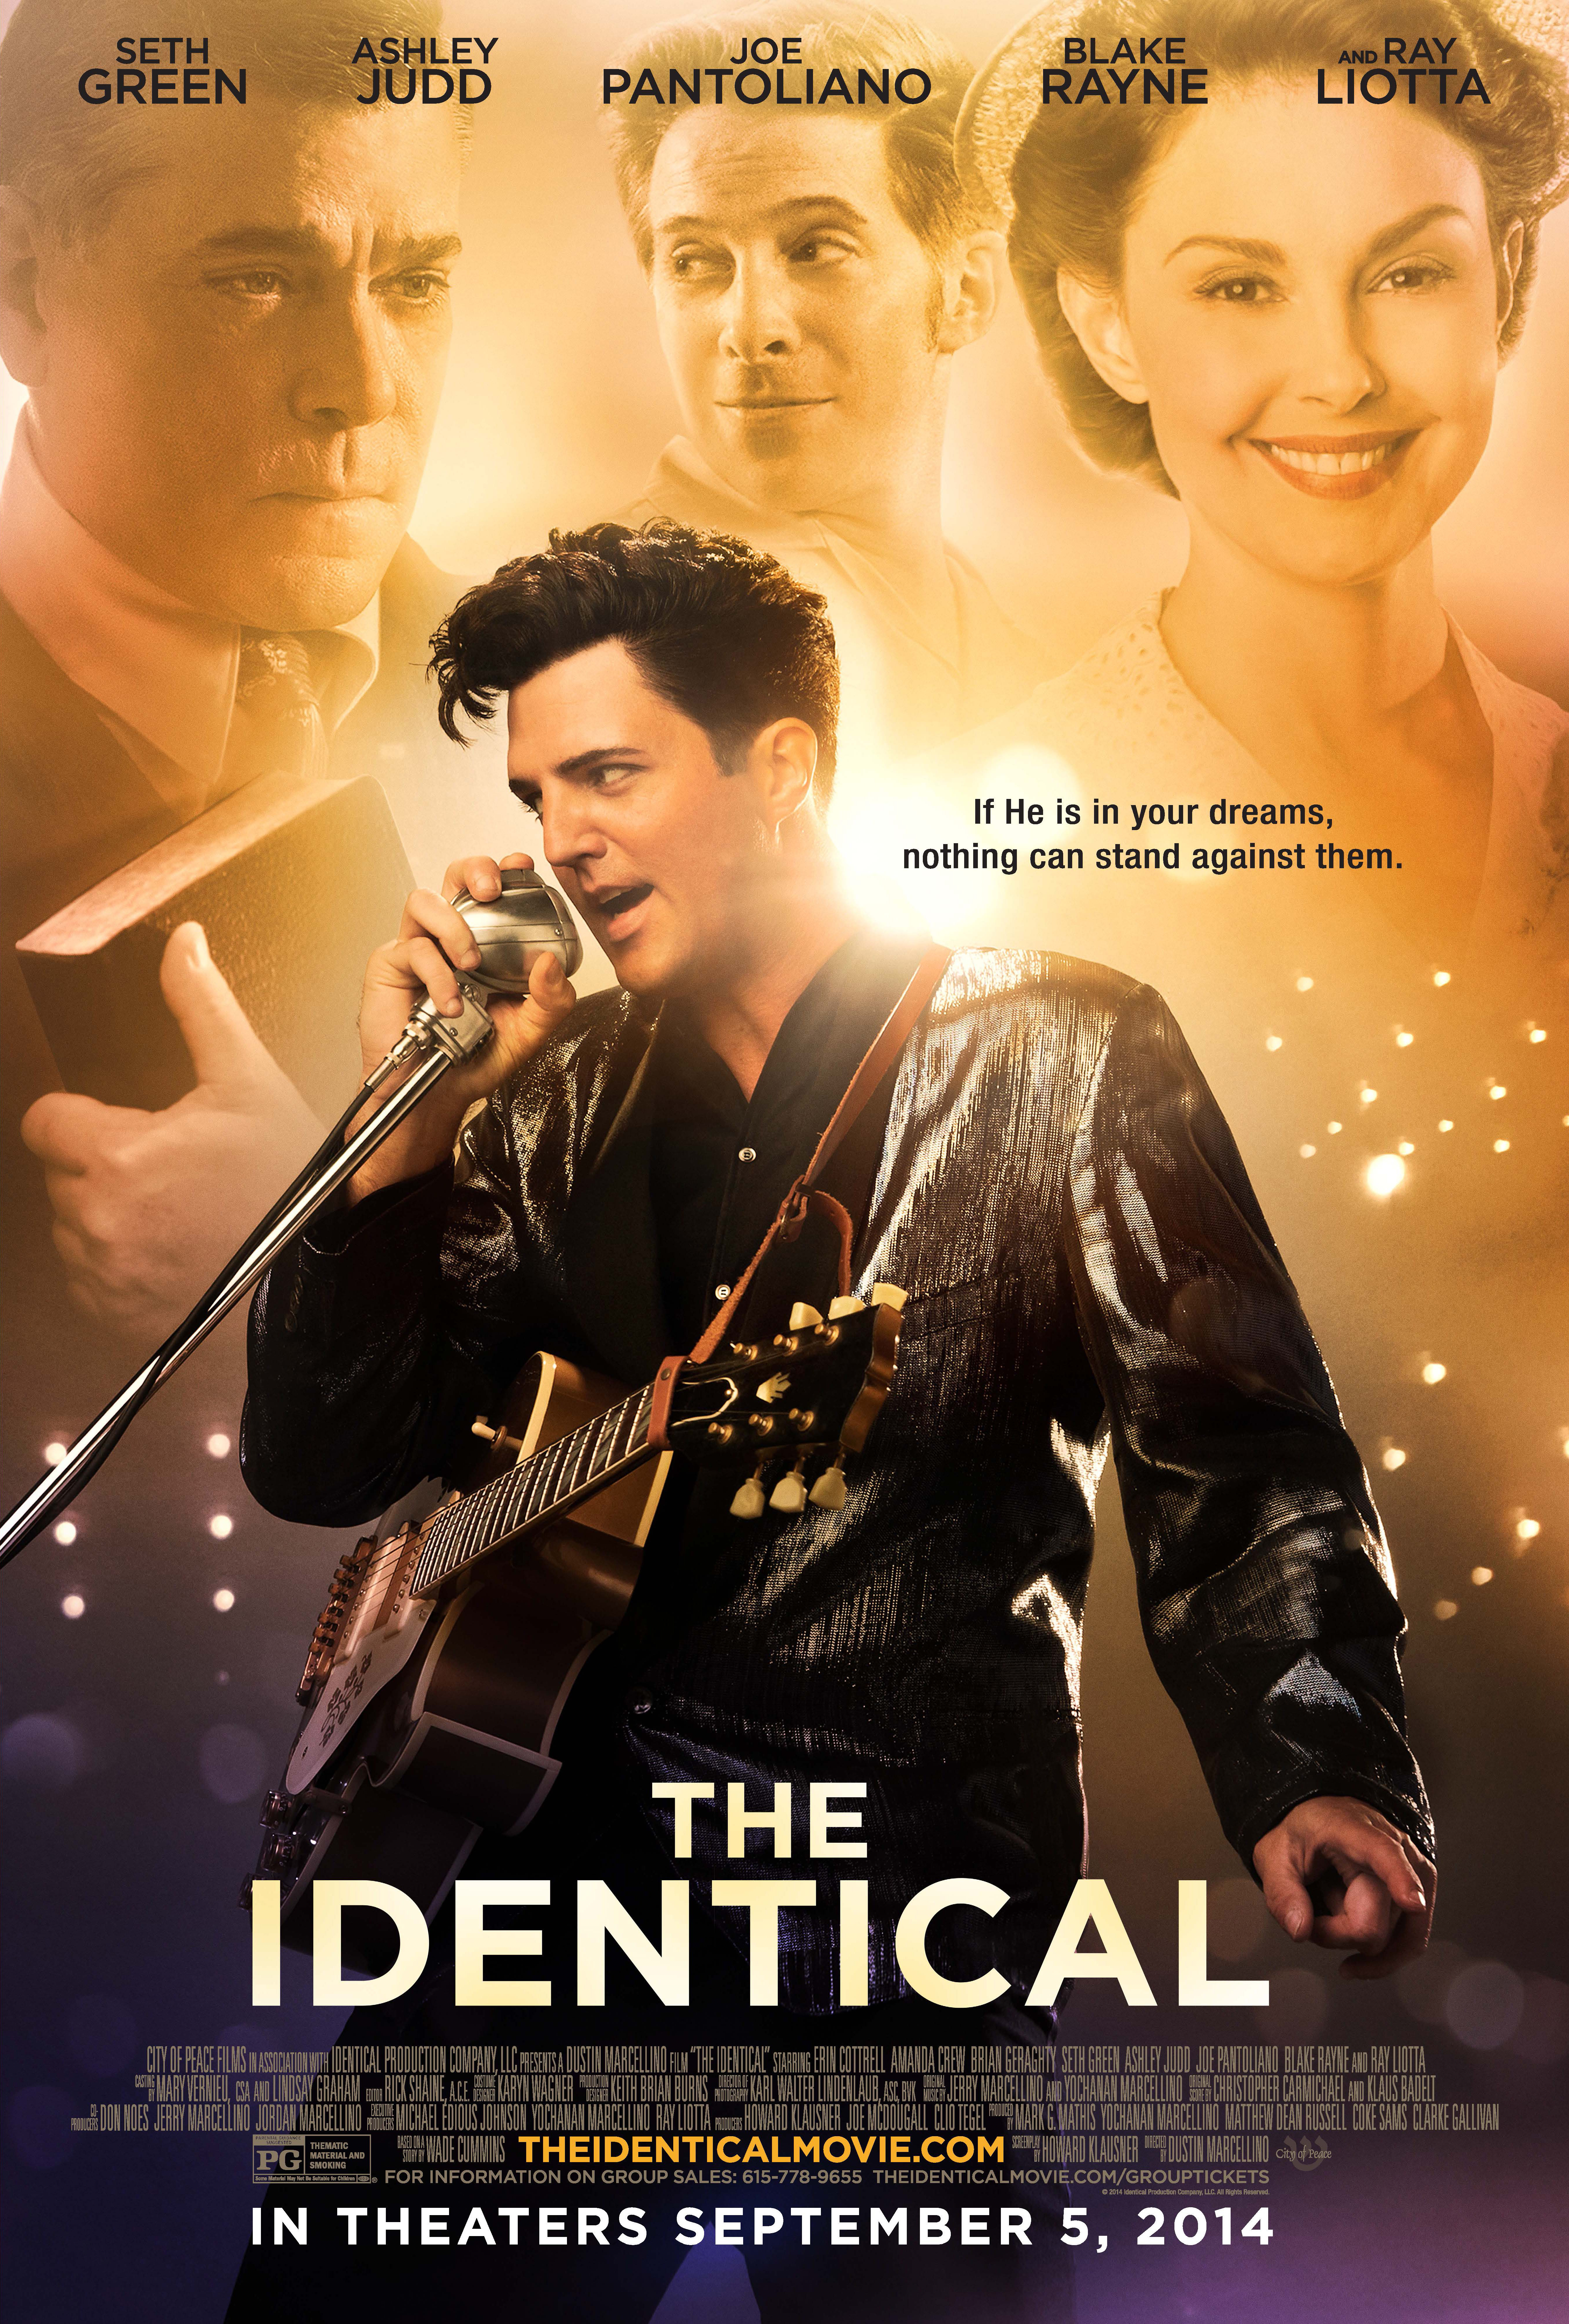 Ashley Judd, Ray Liotta, Seth Green and Blake Rayne in The Identical (2014)